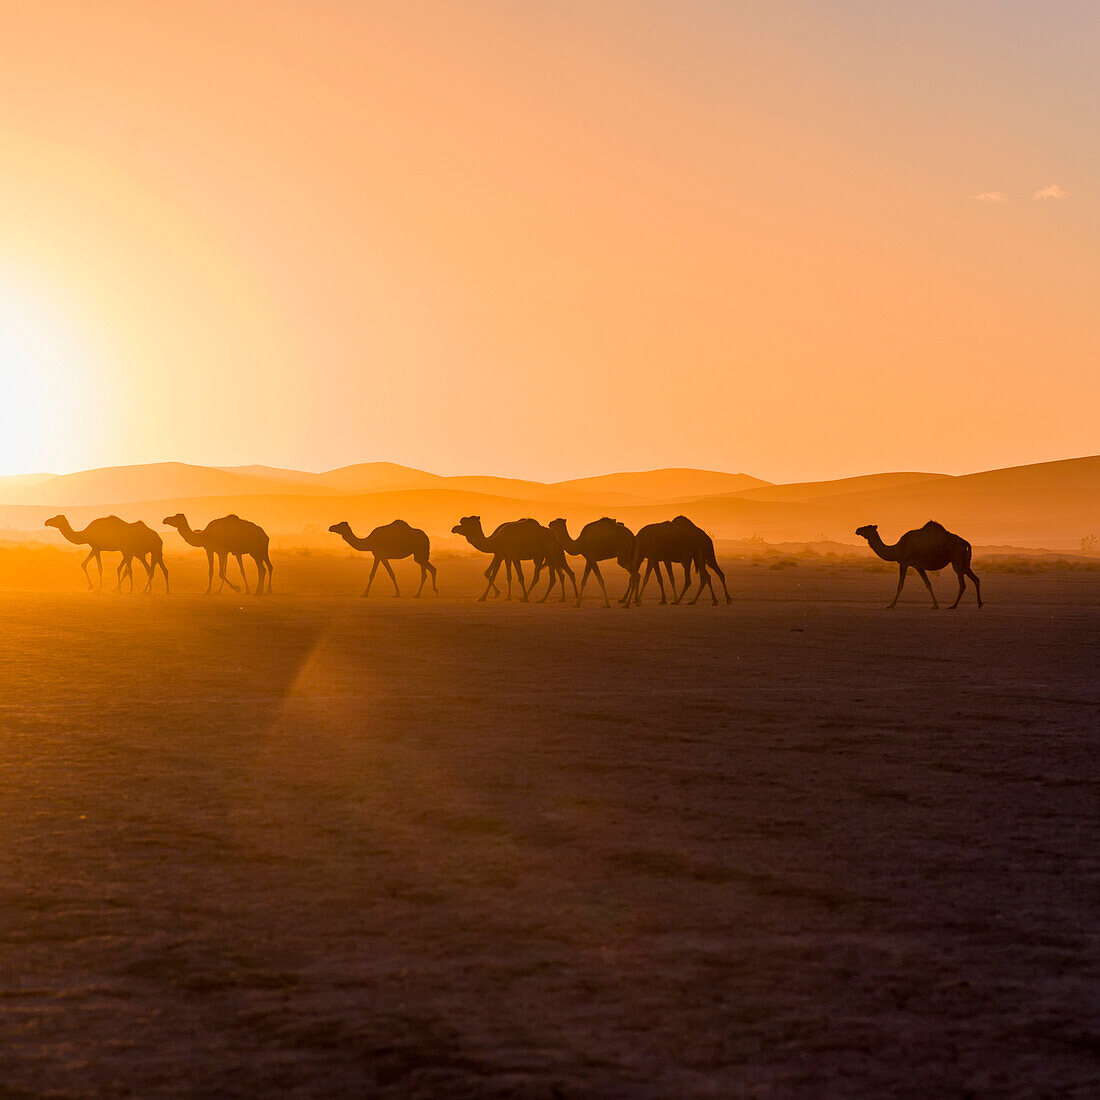 Camels walking across an arid landscape at sunset